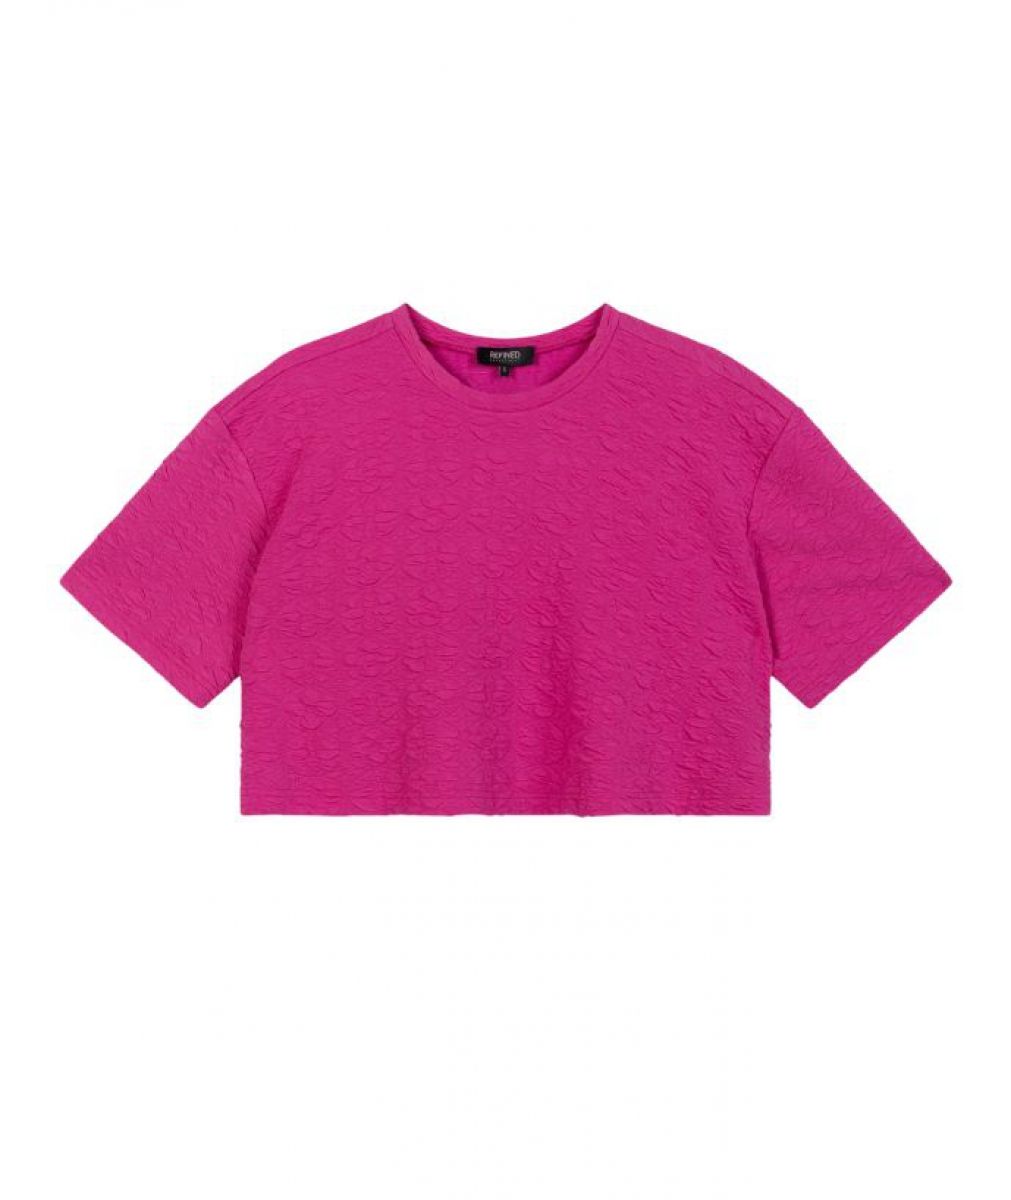 Ladies knitted t-shirt Clara Roze